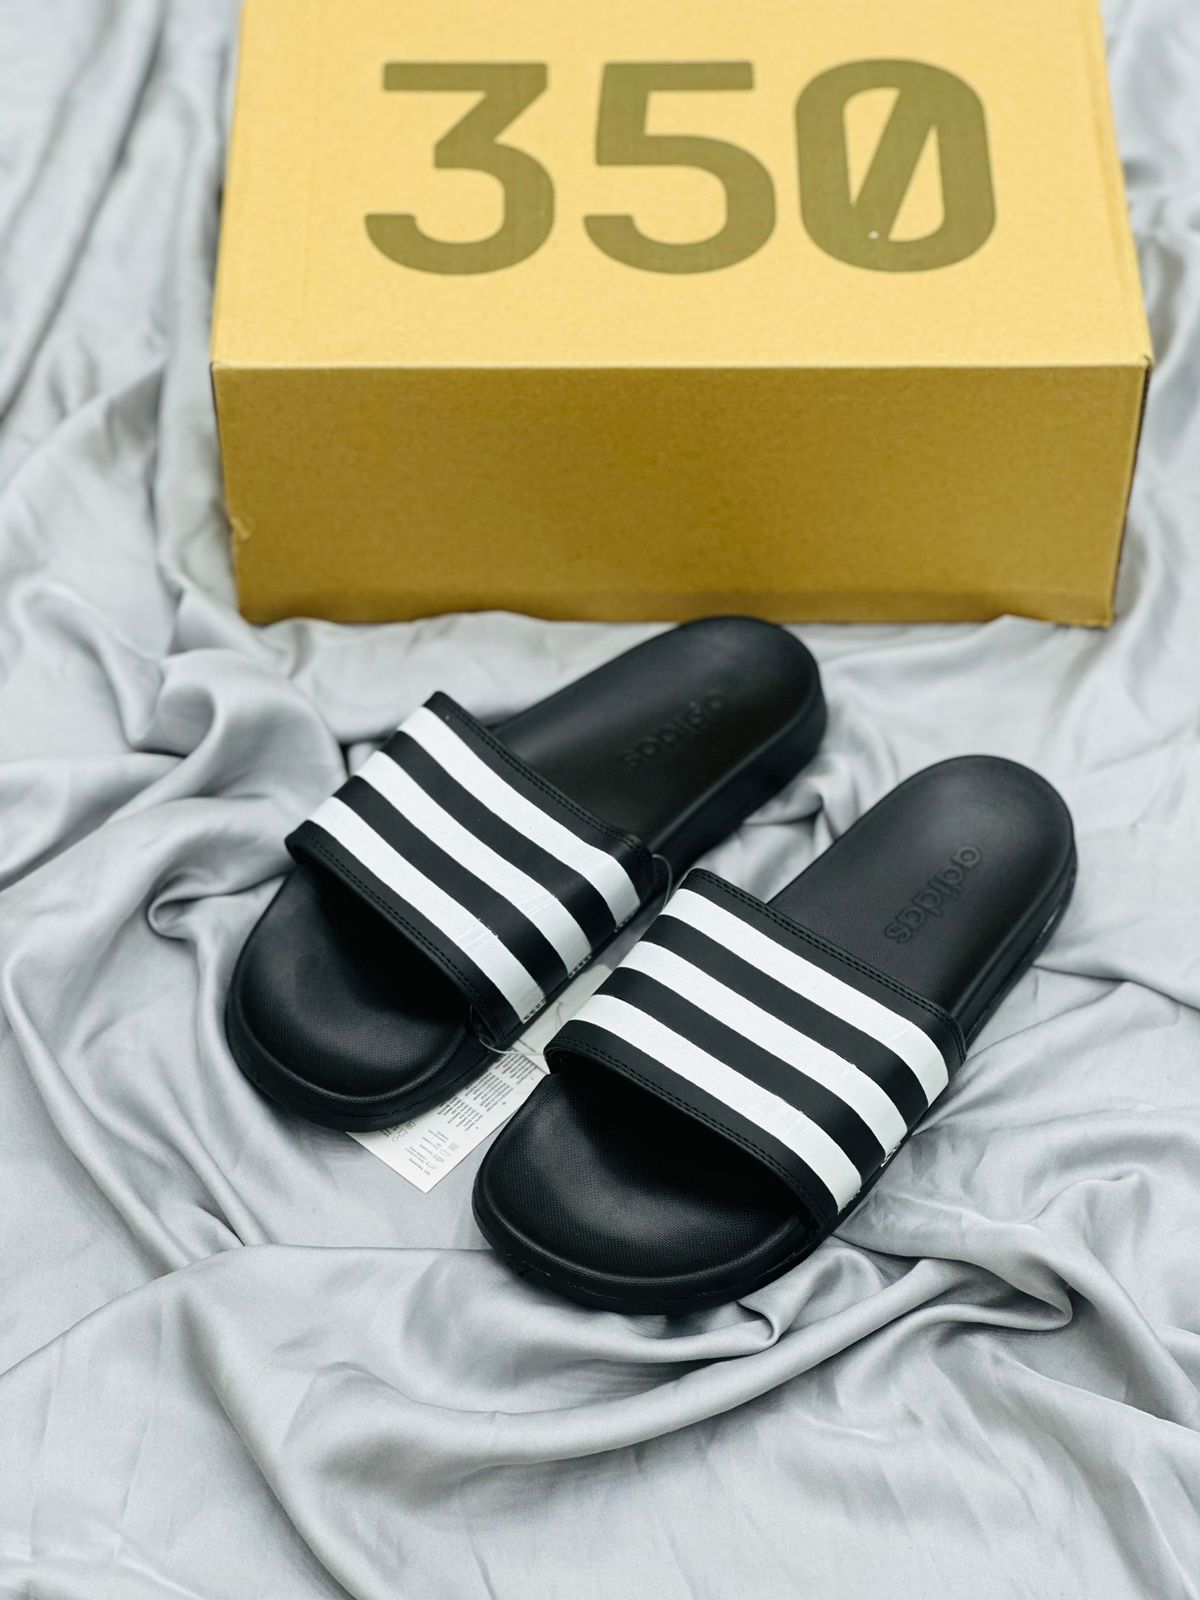 Adidas adilitte Slides Three Stripes - Black and White